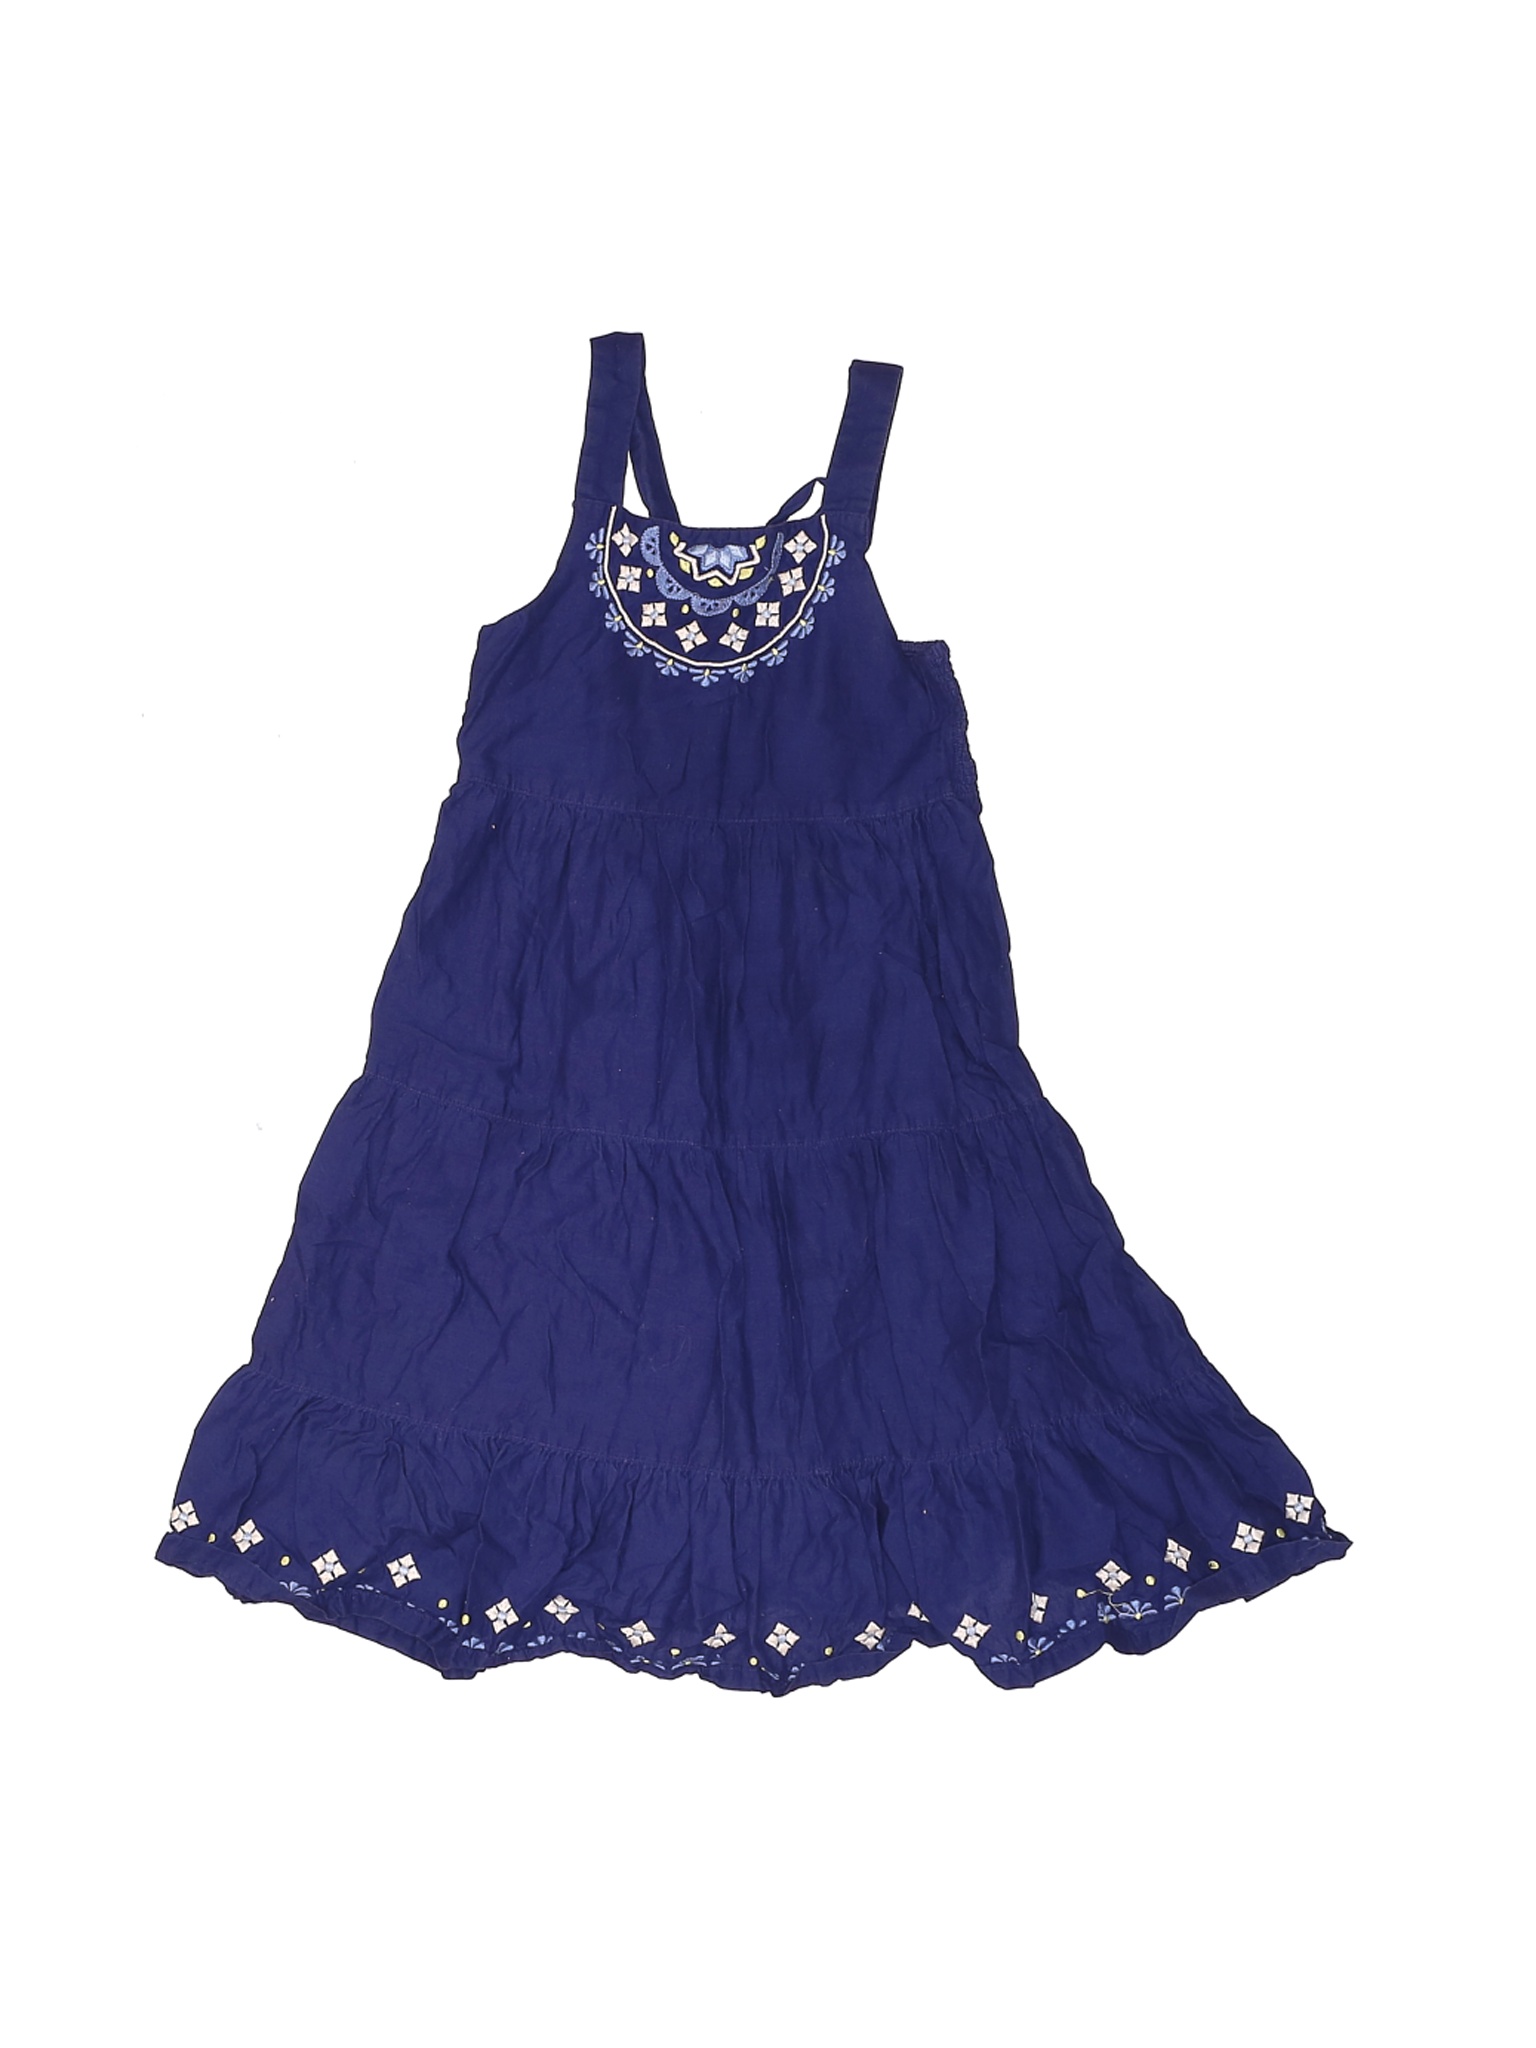 Gymboree Girls Blue Dress 6 | eBay